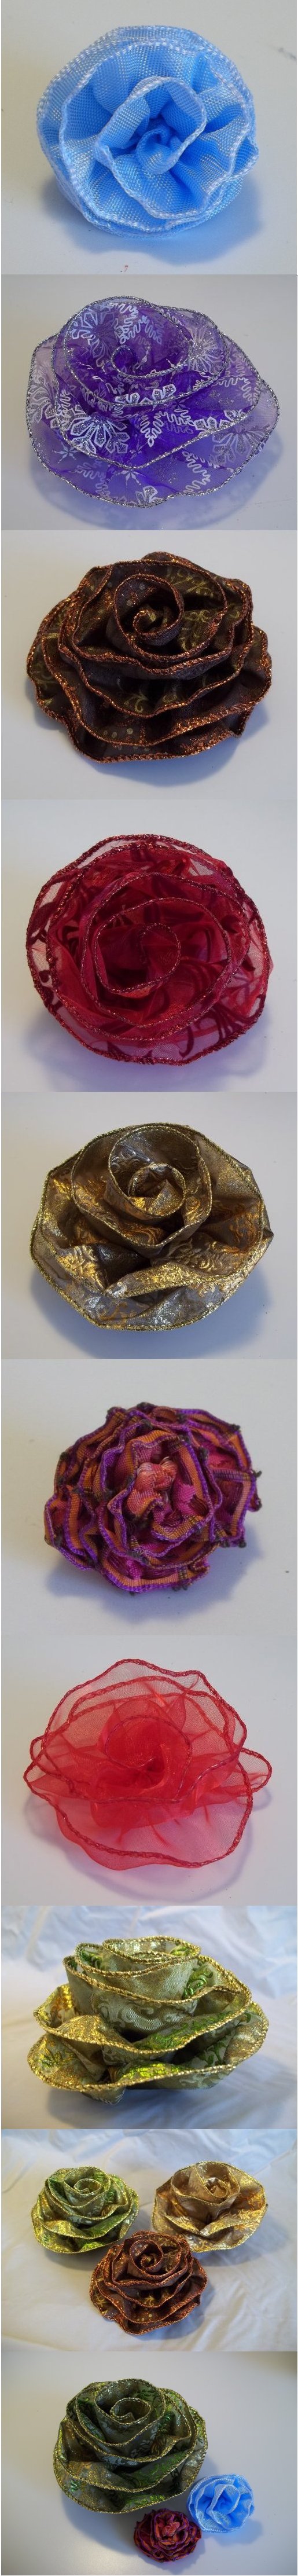 Things to make and do - Ribbon Roses